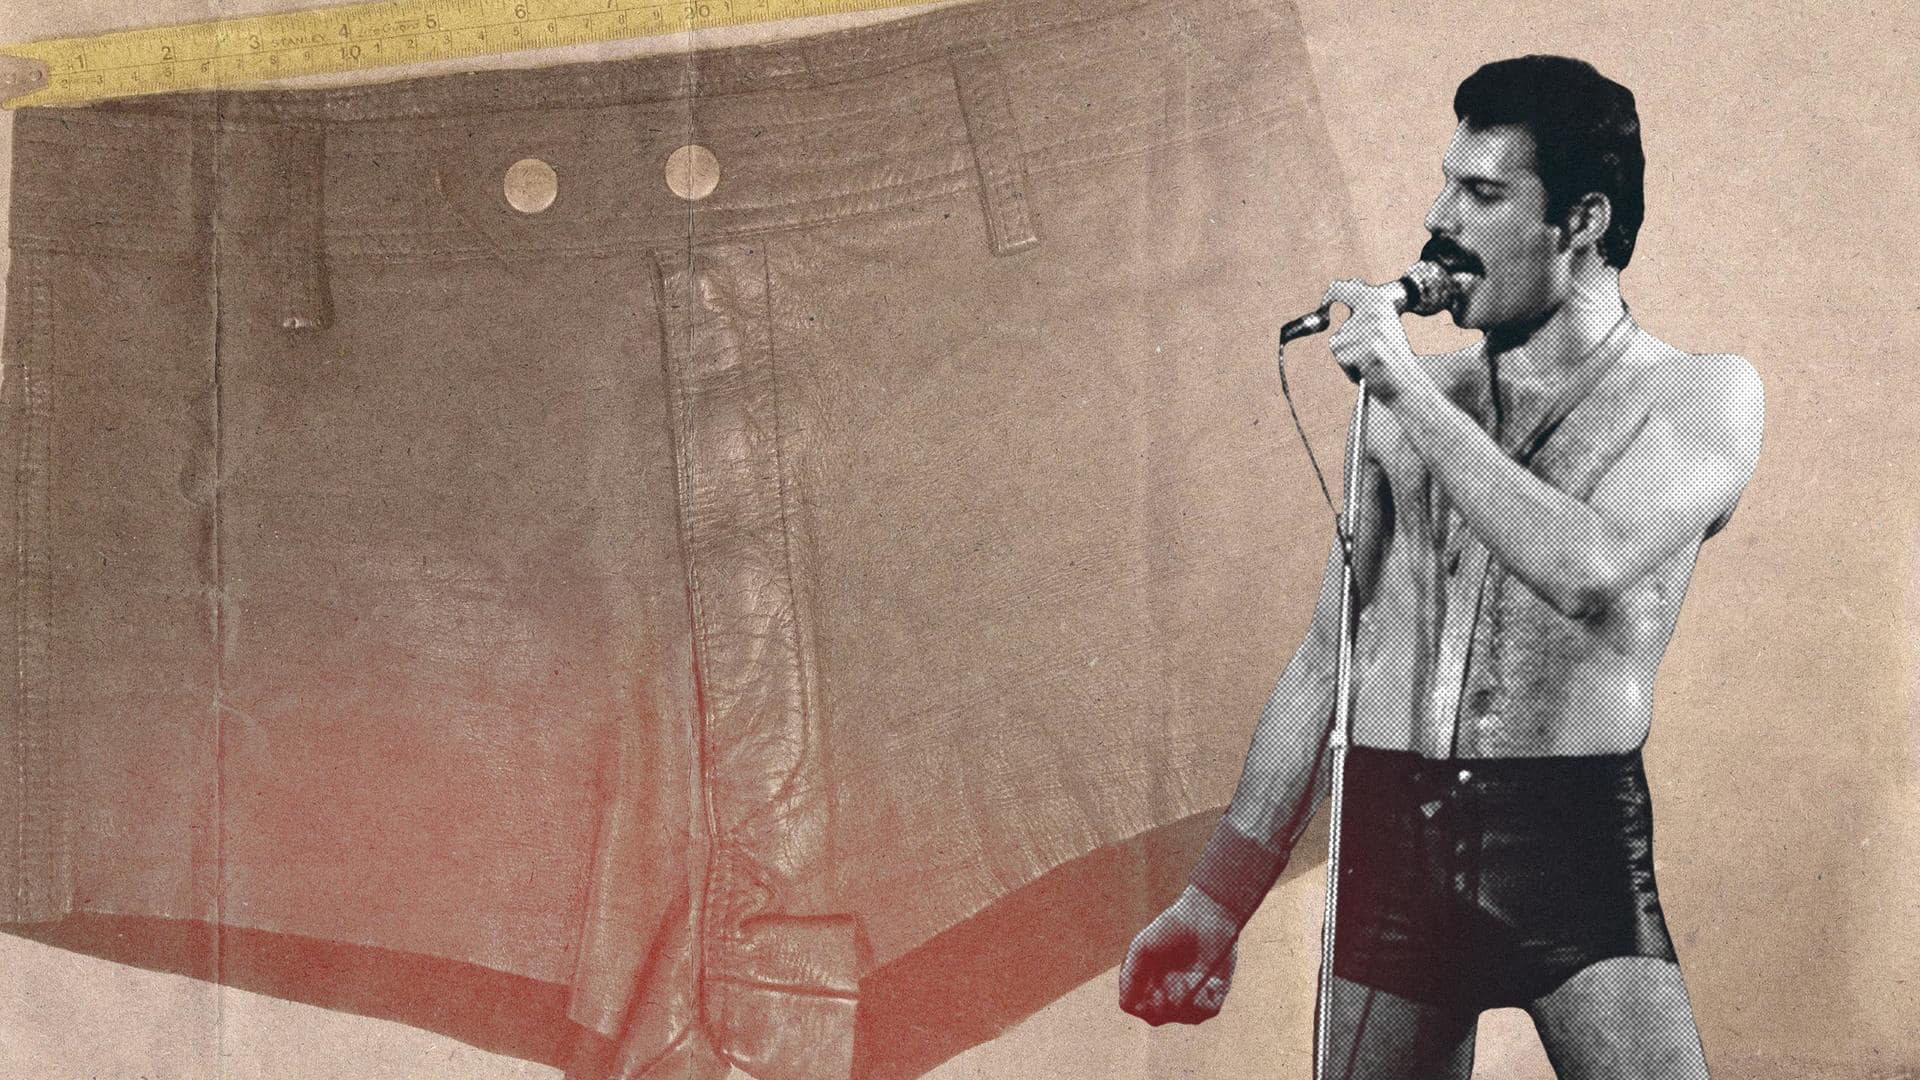 British singer Freddie Mercury's hot pants sold for £18,000